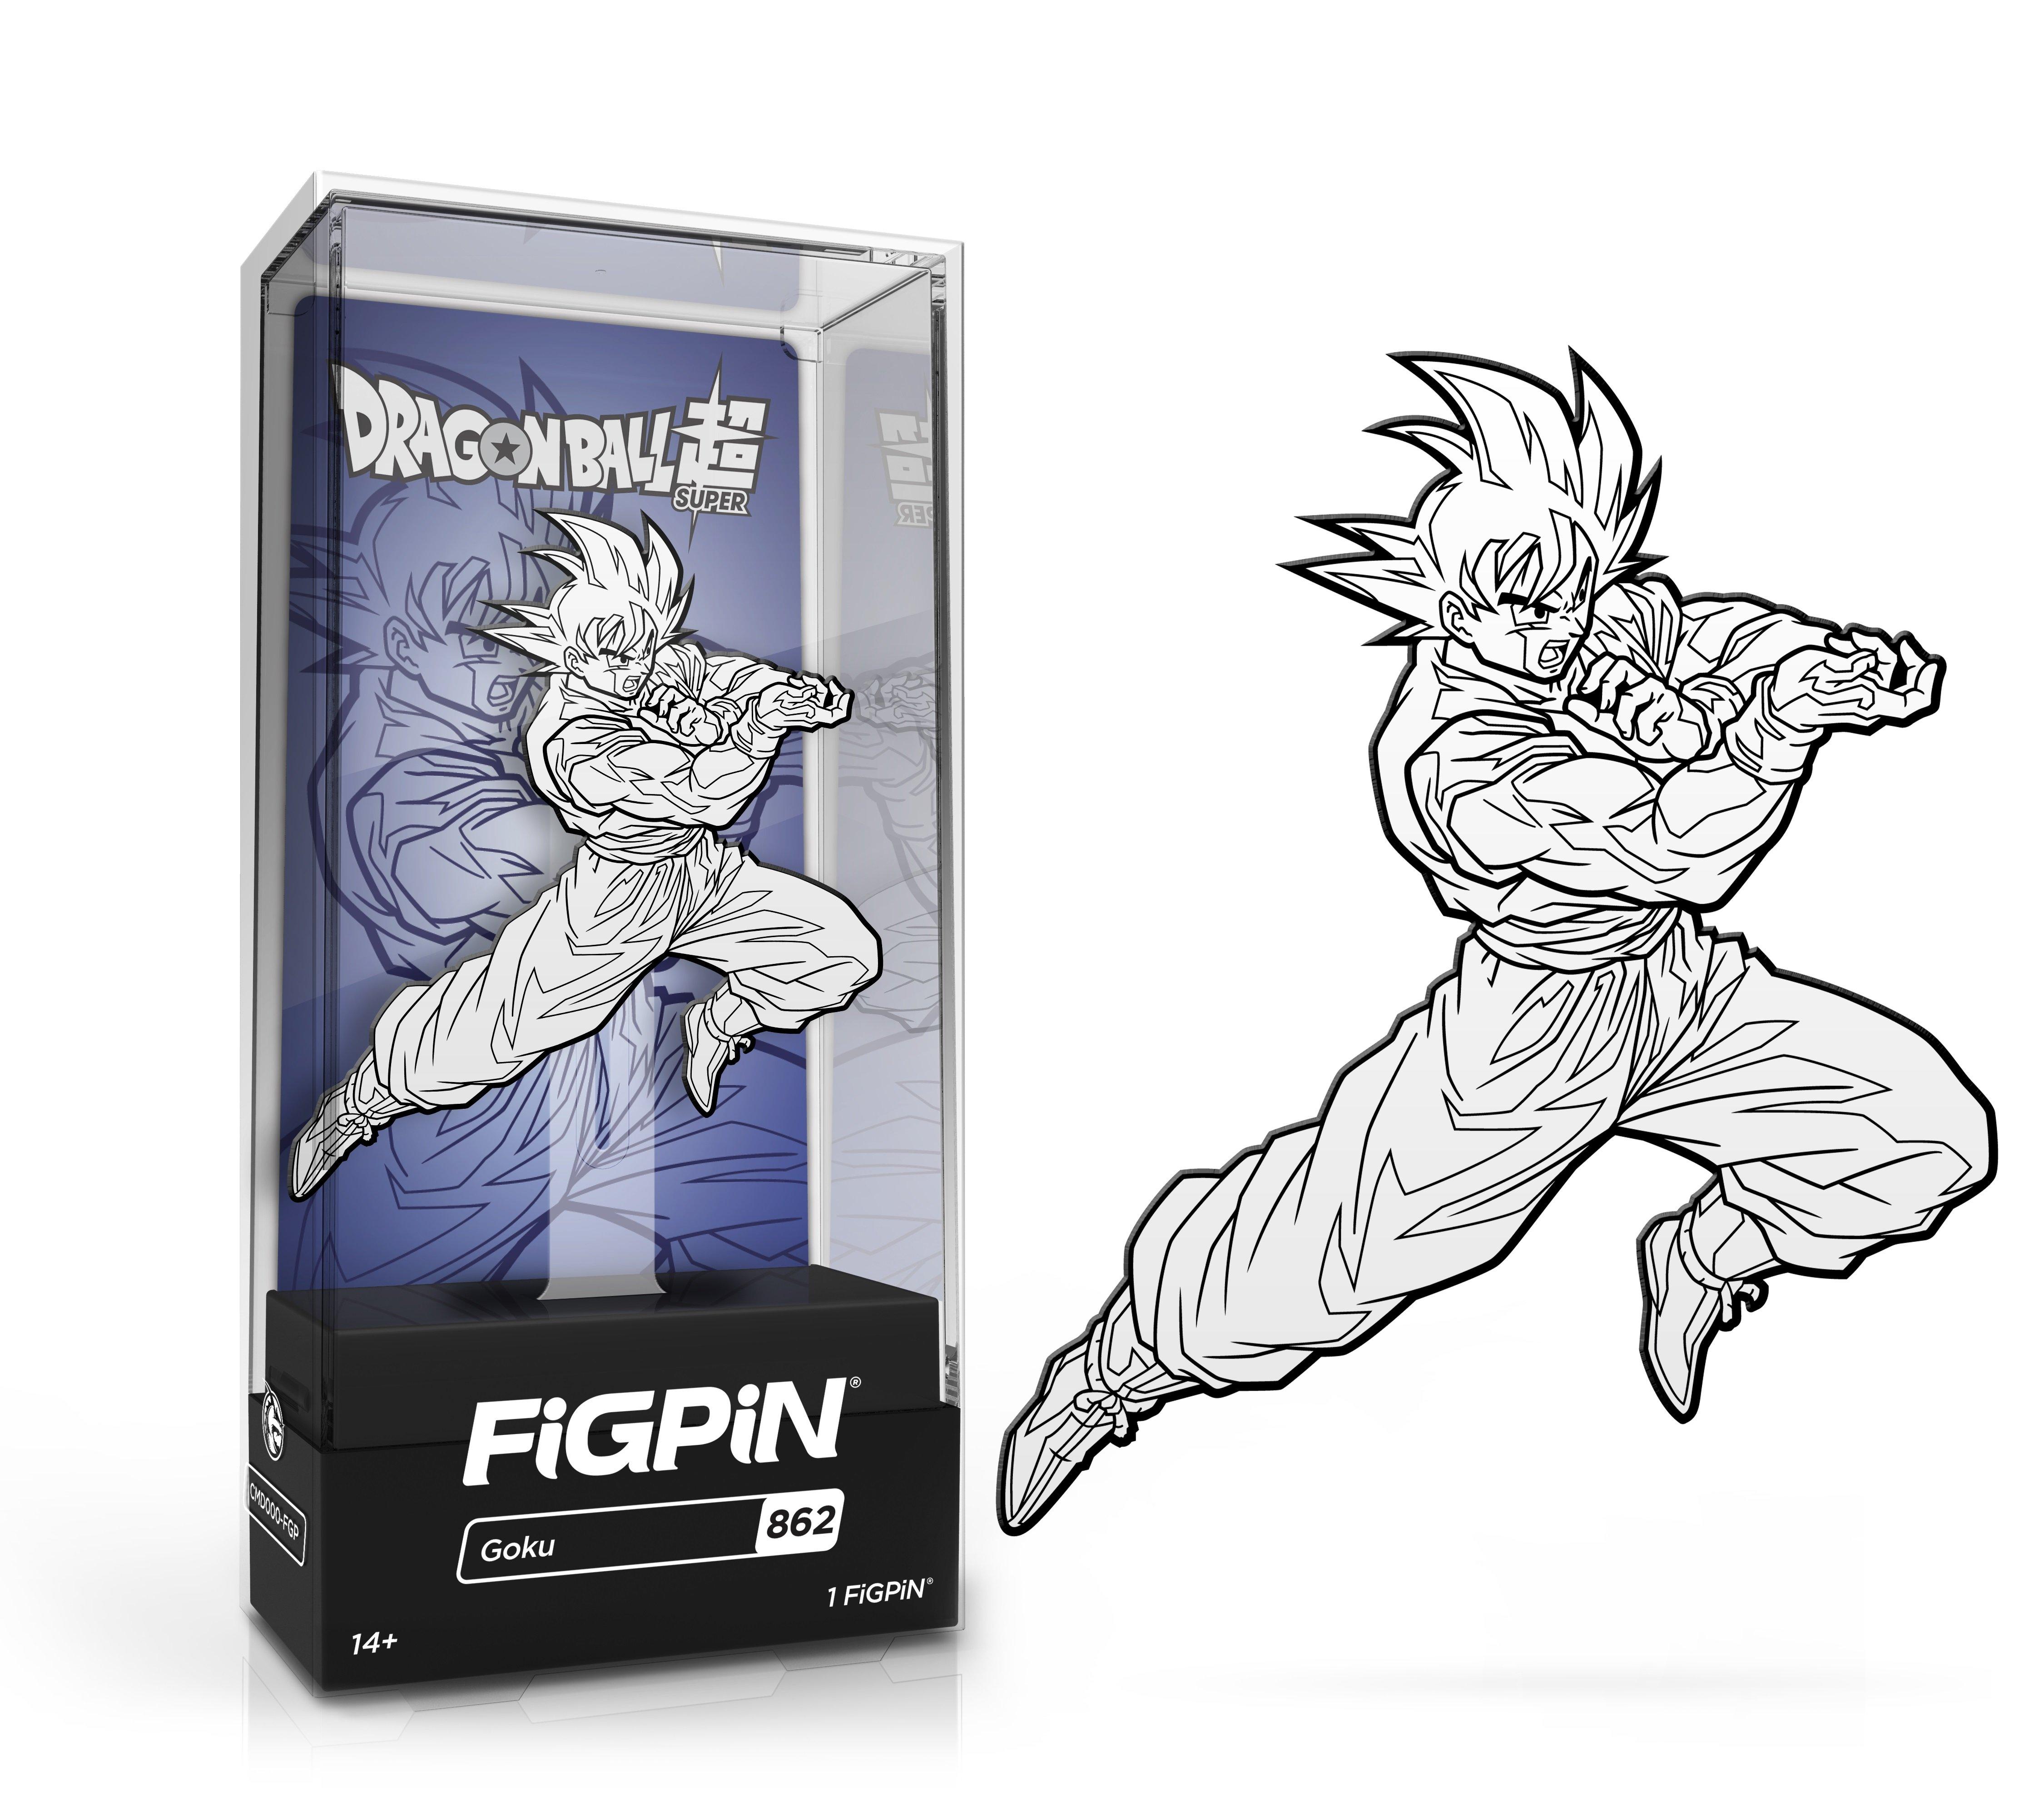 Dragon Ball Z Goku FiGPiN XL #X27 6 Collectible Enamel Pin OOB